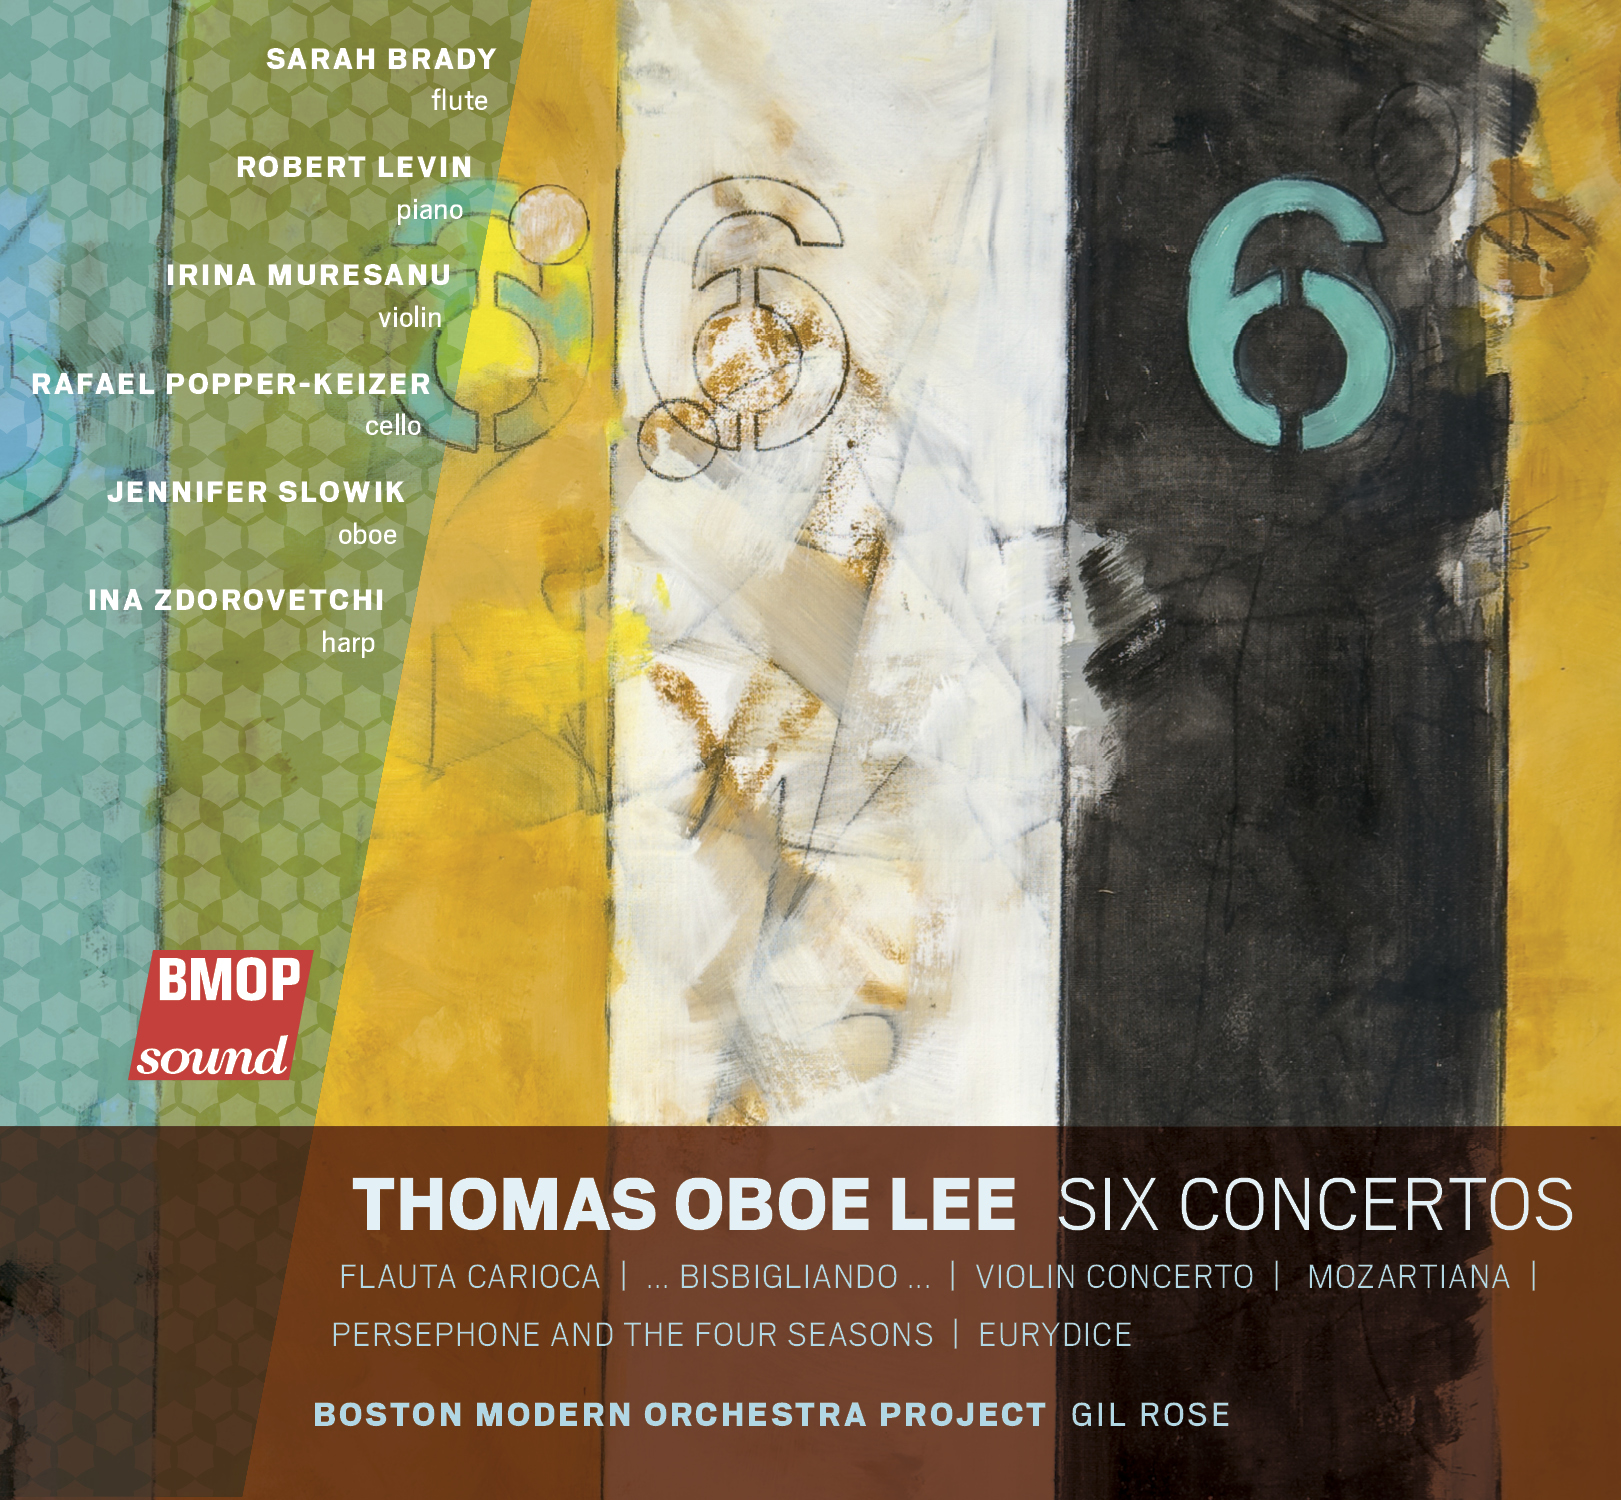 Art for Violin Concerto - I. Part I by Thomas Oboe Lee by Irina Muresanu, violin